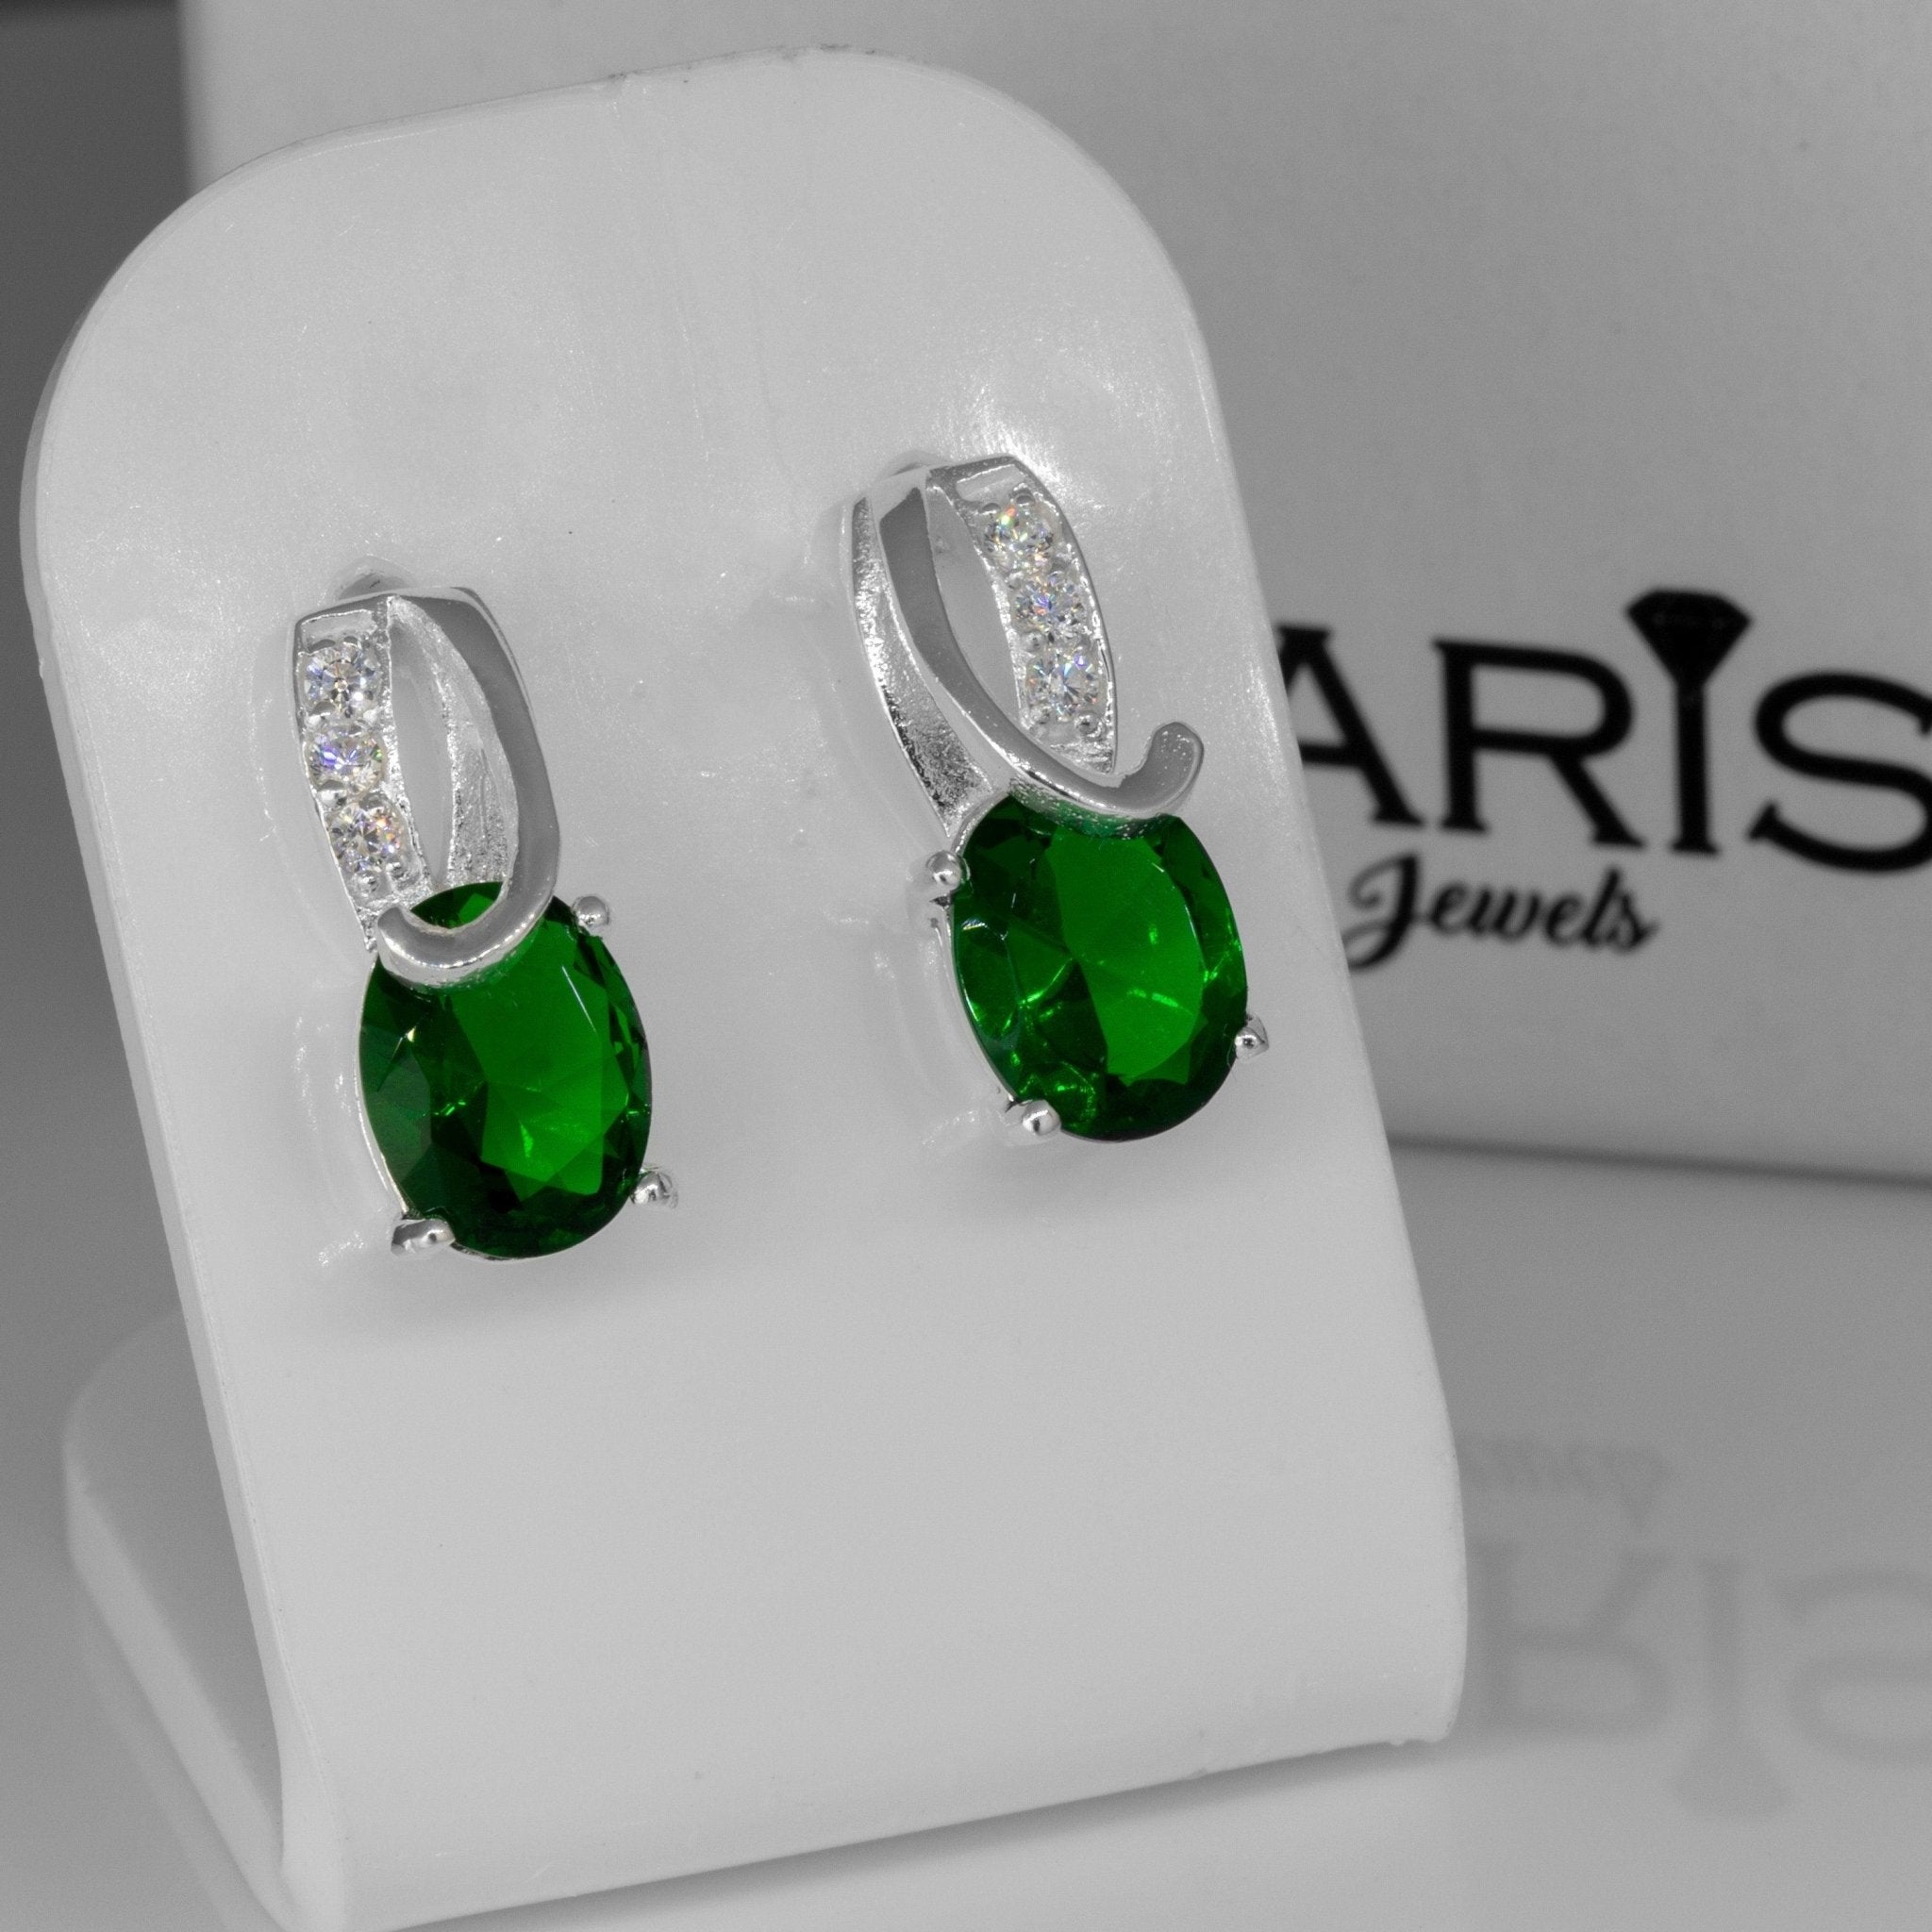 925 Sterling Silver Cubic Zirconia CZ & Emerald Green Ladies Dangle Earrings Jewellery Gift Boxed Man-made Diamond Gemstone Jewelry